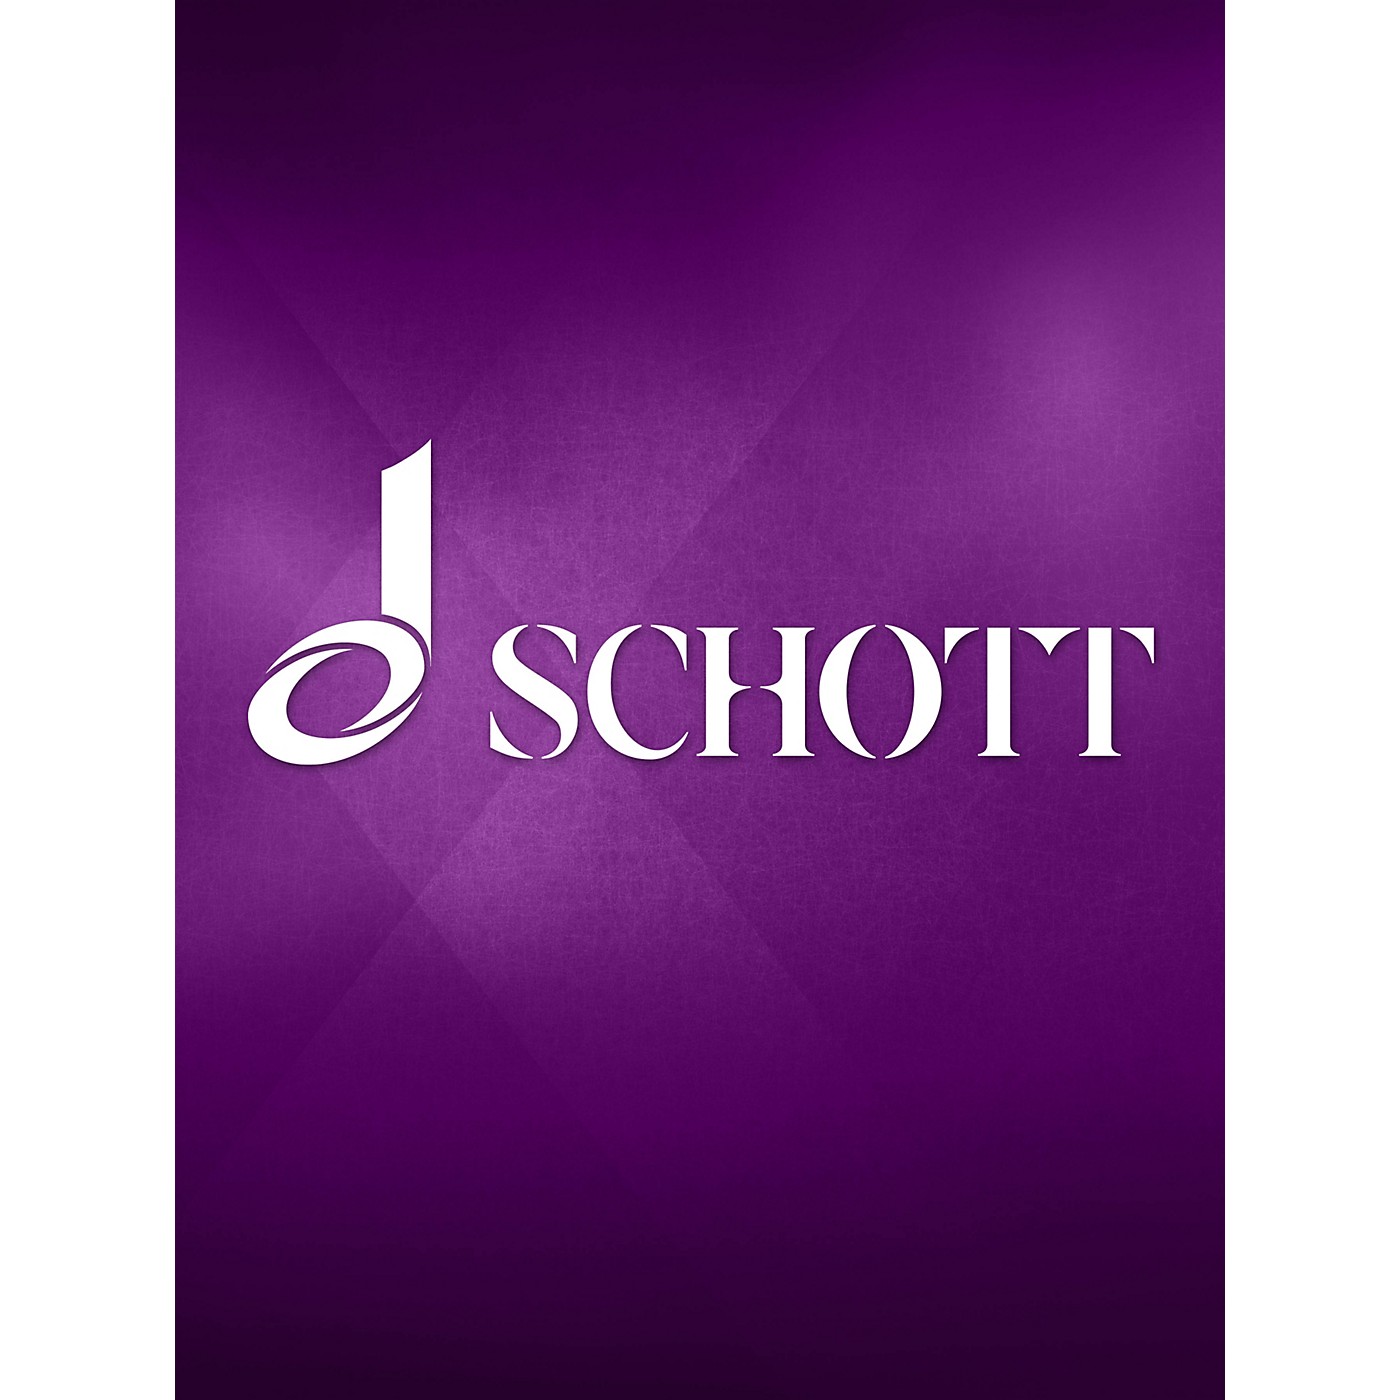 Schott Organ Conc 1 Op 4, No 1 G Min (Oboe 2 Part) Schott Series by Georg Friedrich Händel thumbnail